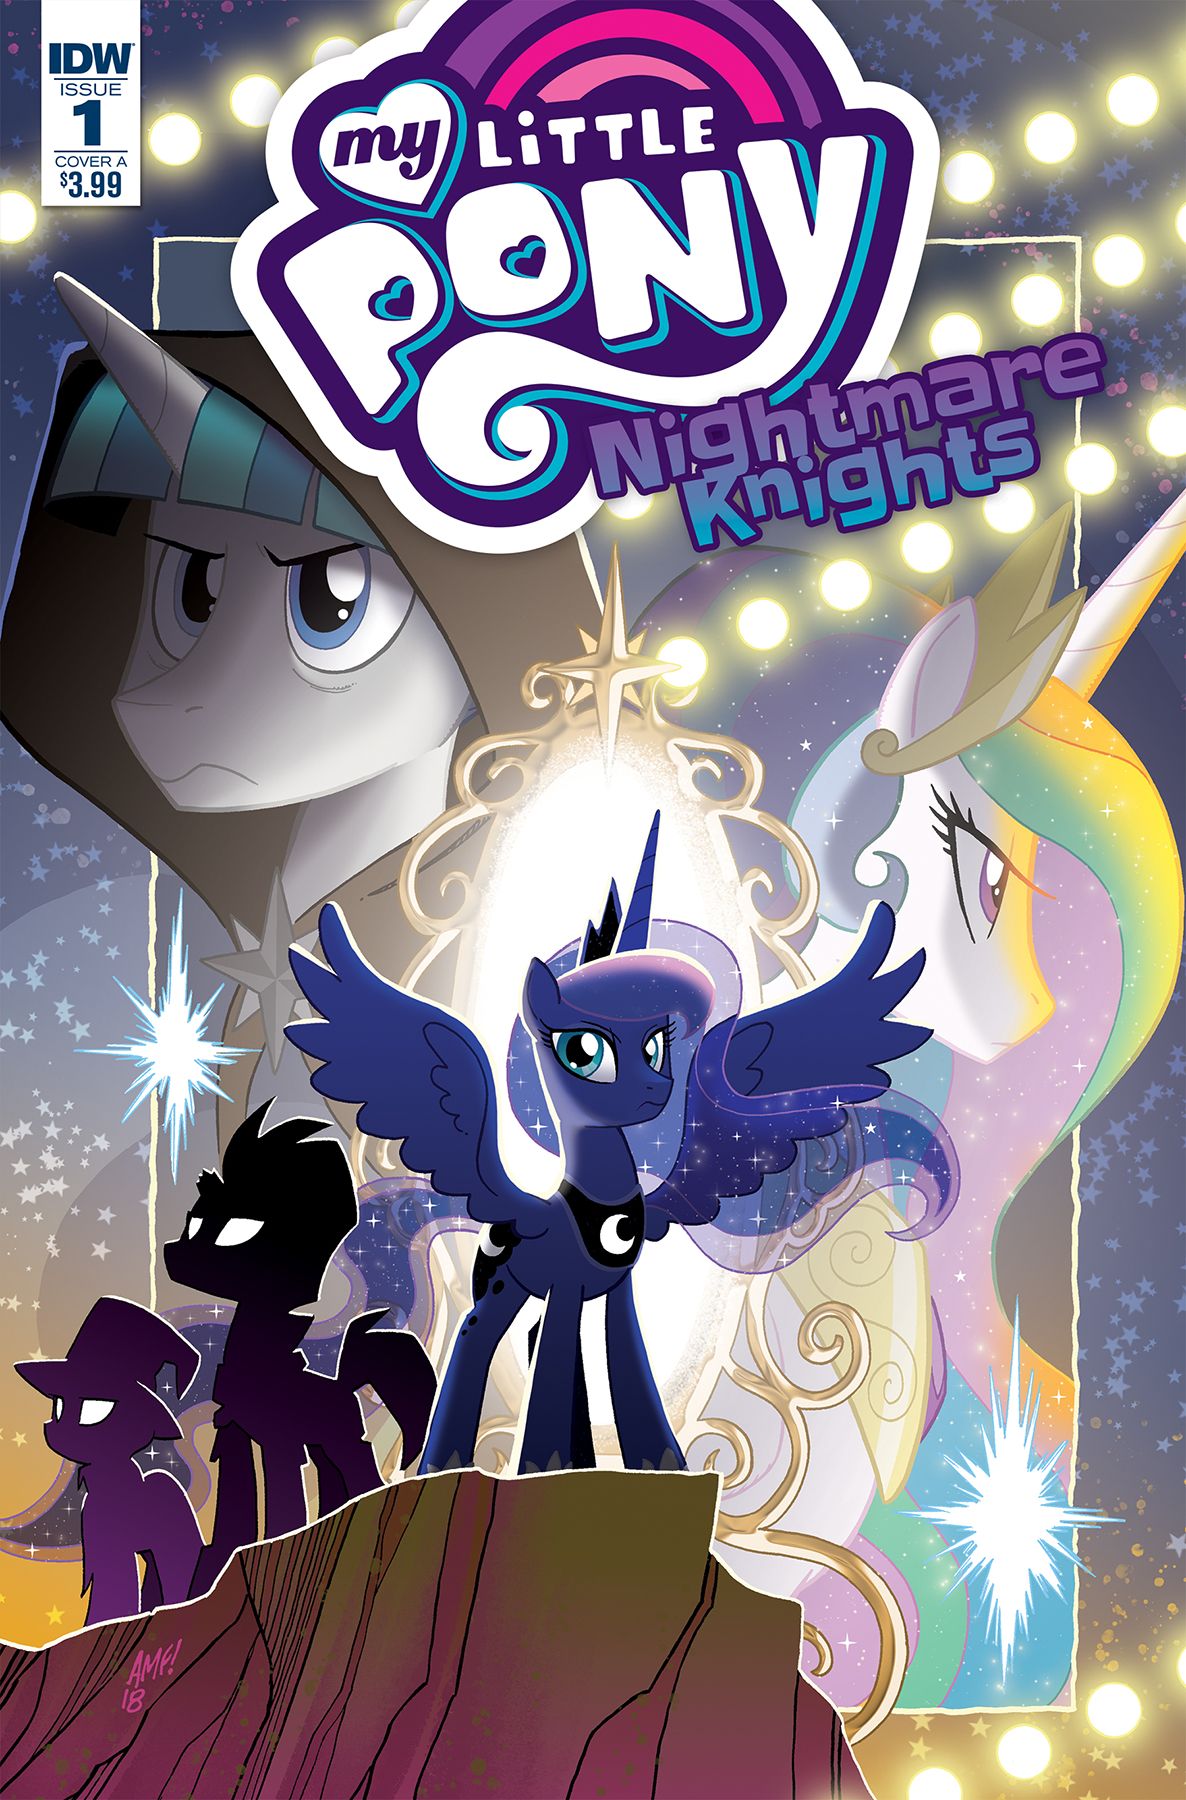 My Little Pony: Nightmare Knights #1 Comic